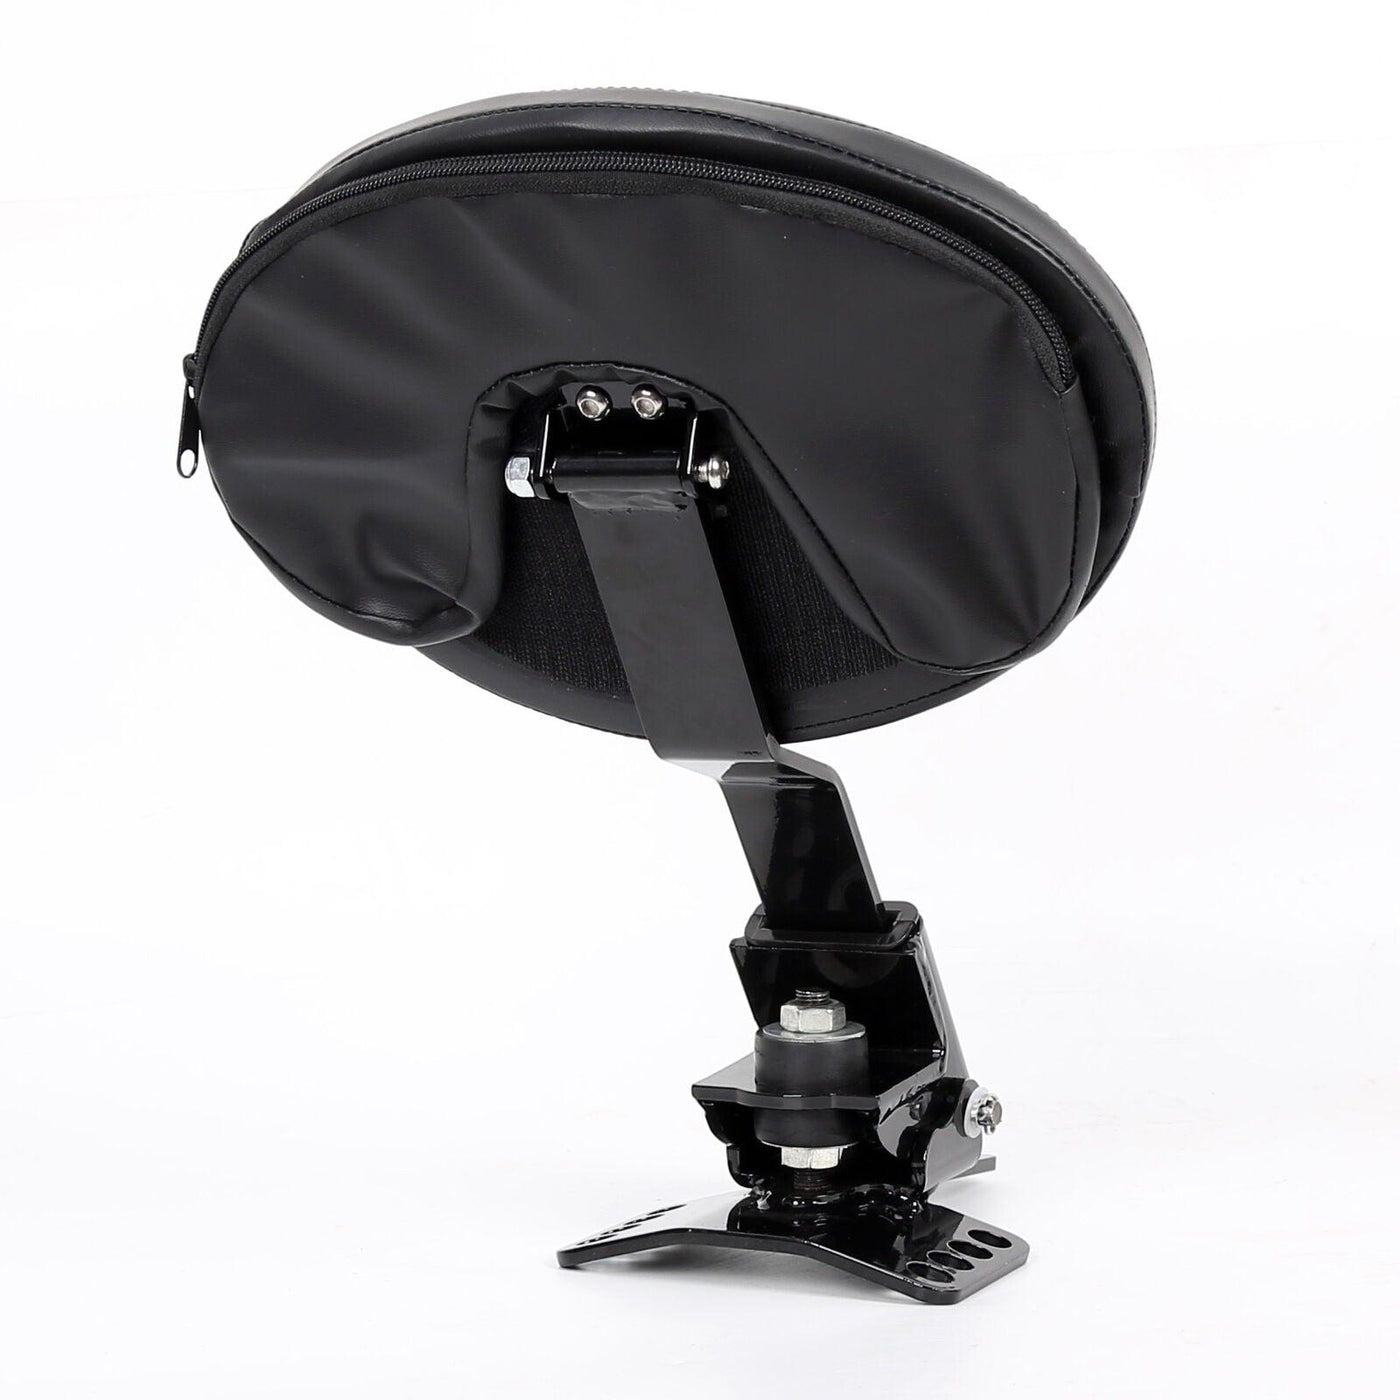 Adjustable Plug-In Driver Rider Backrest Kit For Harley 88-UP FLHT Electra Glide - Moto Life Products